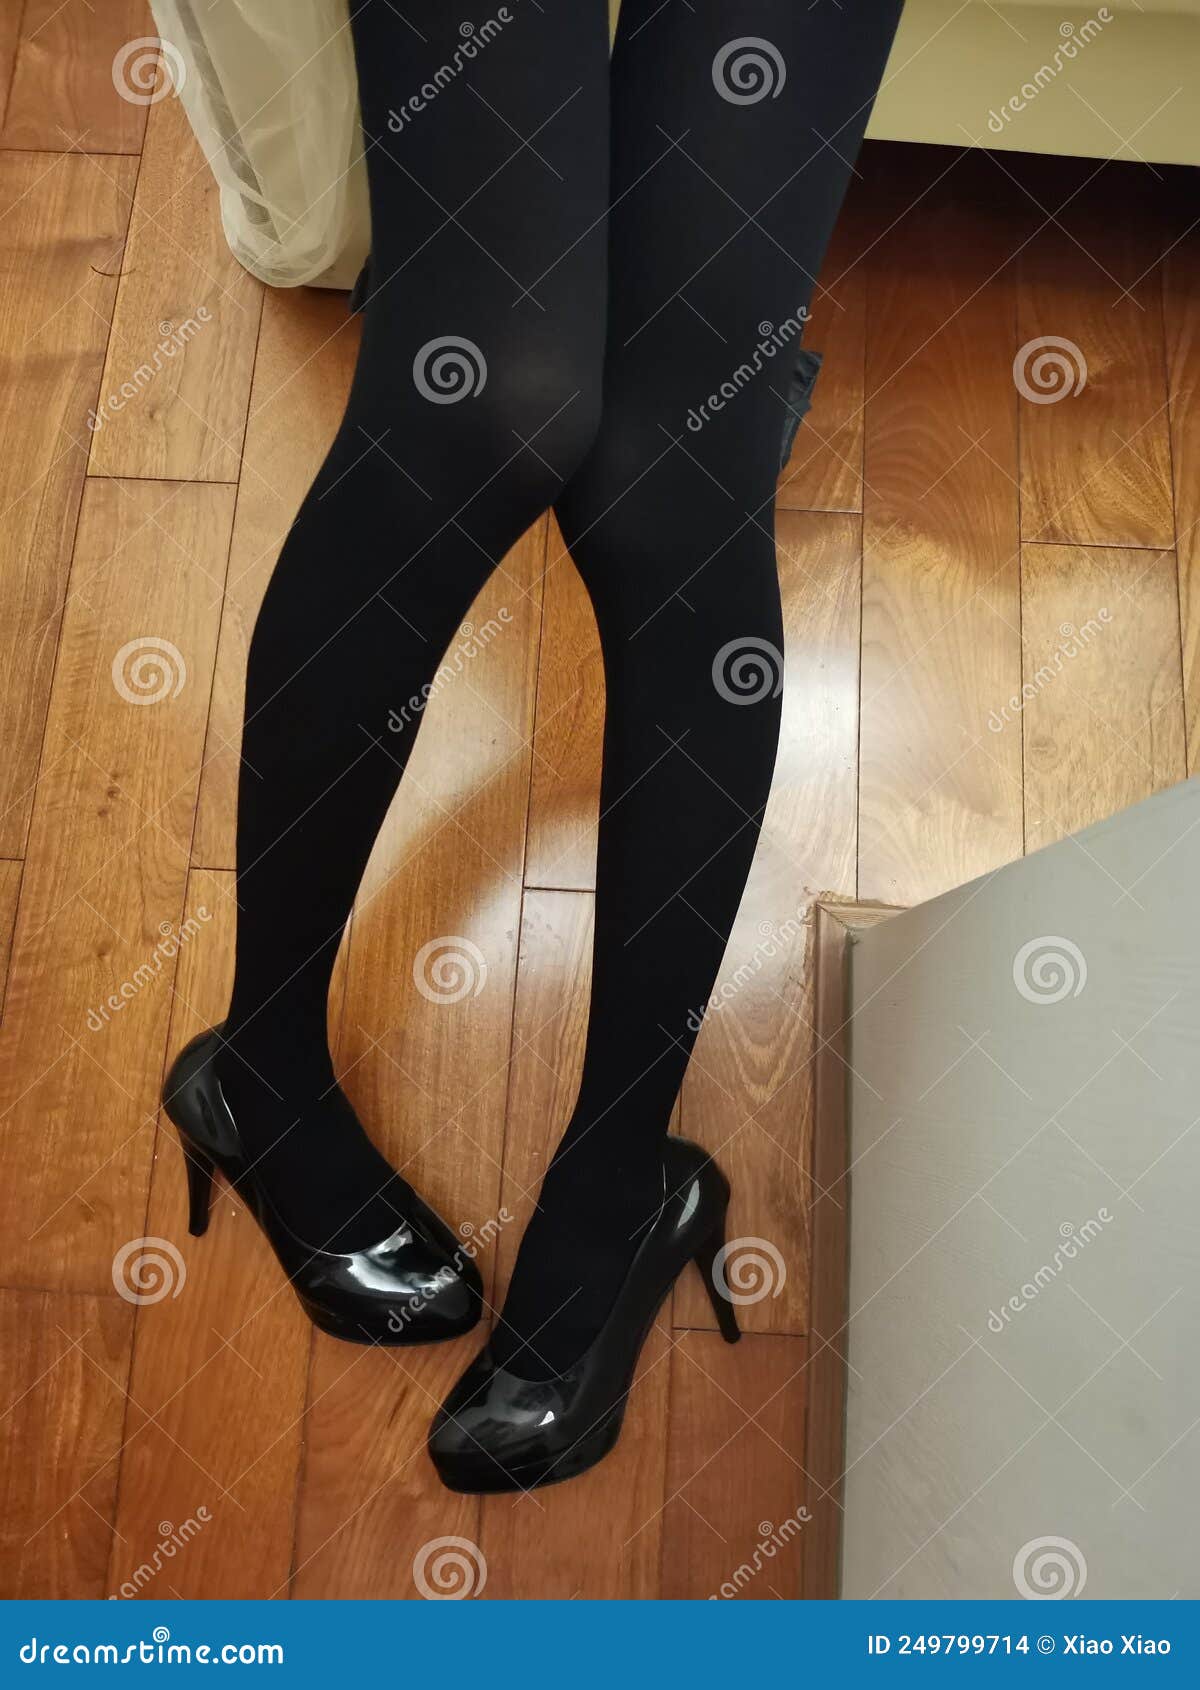 https://thumbs.dreamstime.com/z/female-legs-nylon-stockings-legs-black-nylon-stockings-sexy-indoor-photography-women-silk-stockings-high-heels-indoor-female-legs-249799714.jpg